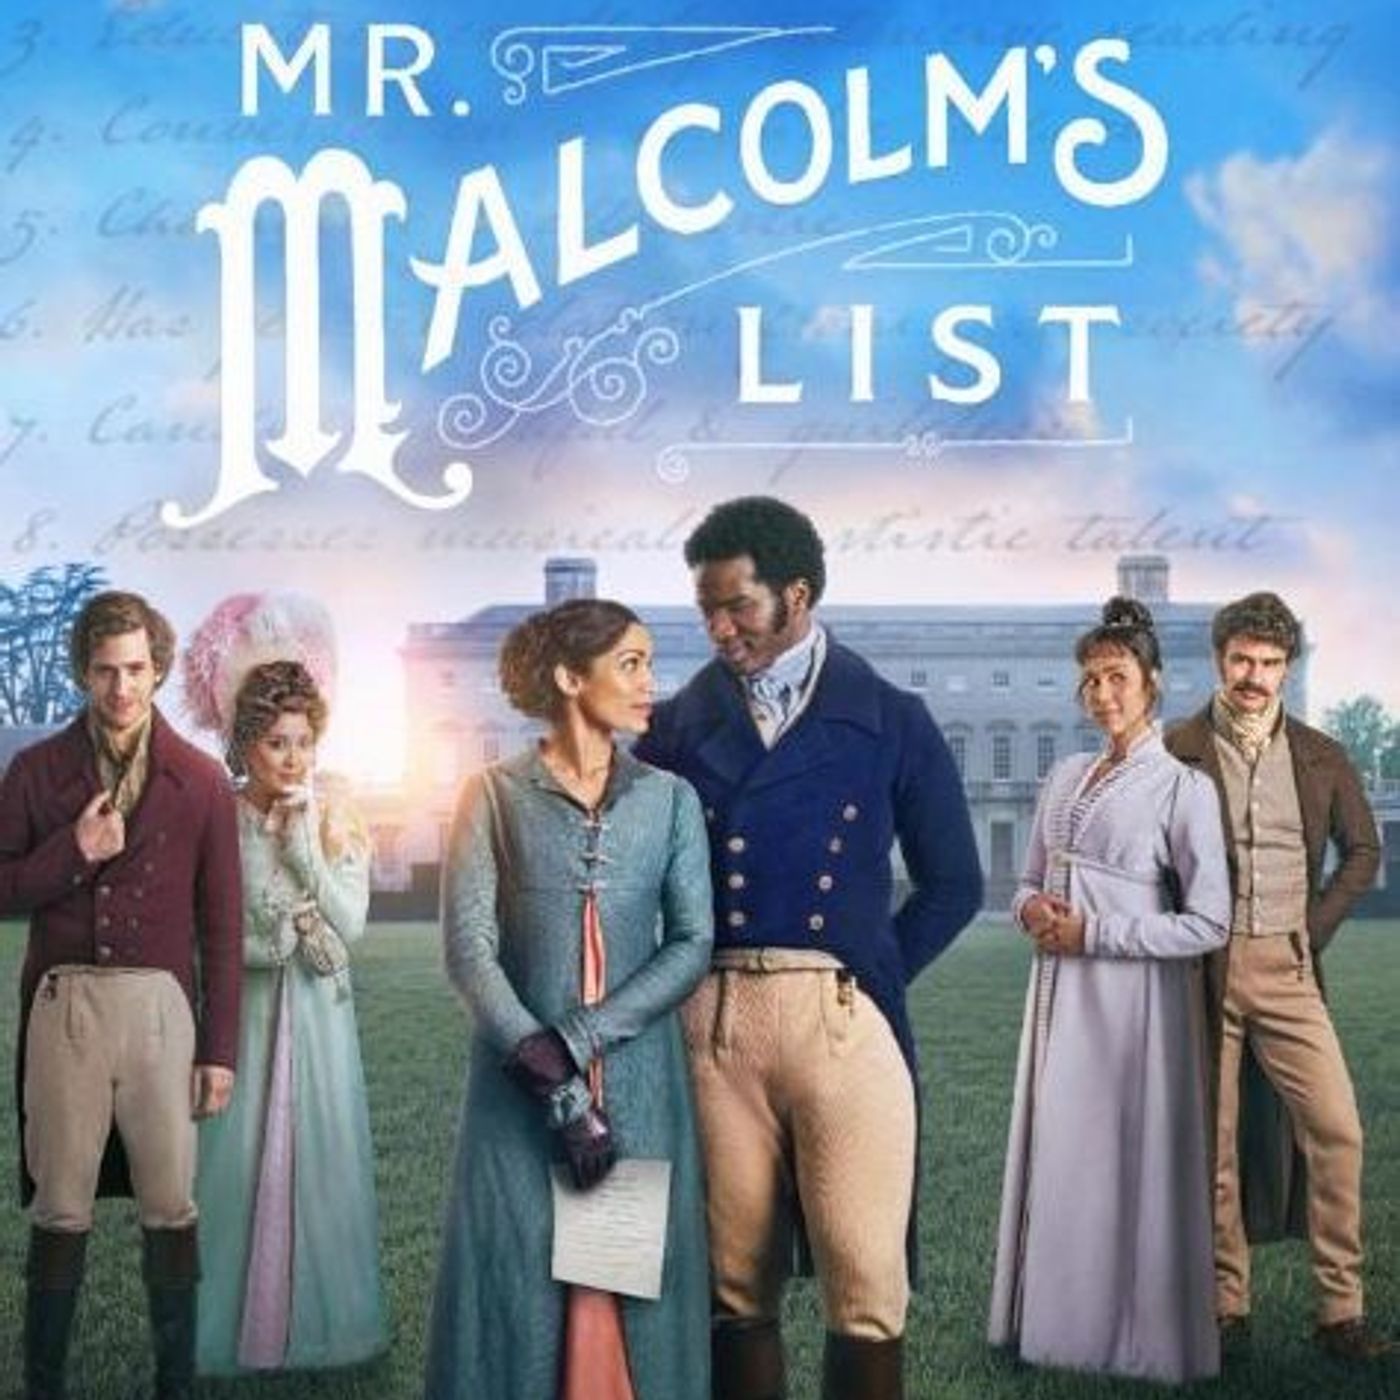 Episode 322: Emma Holly Jones & Amelia Warner On The Music Of Mr Malcolm’s List